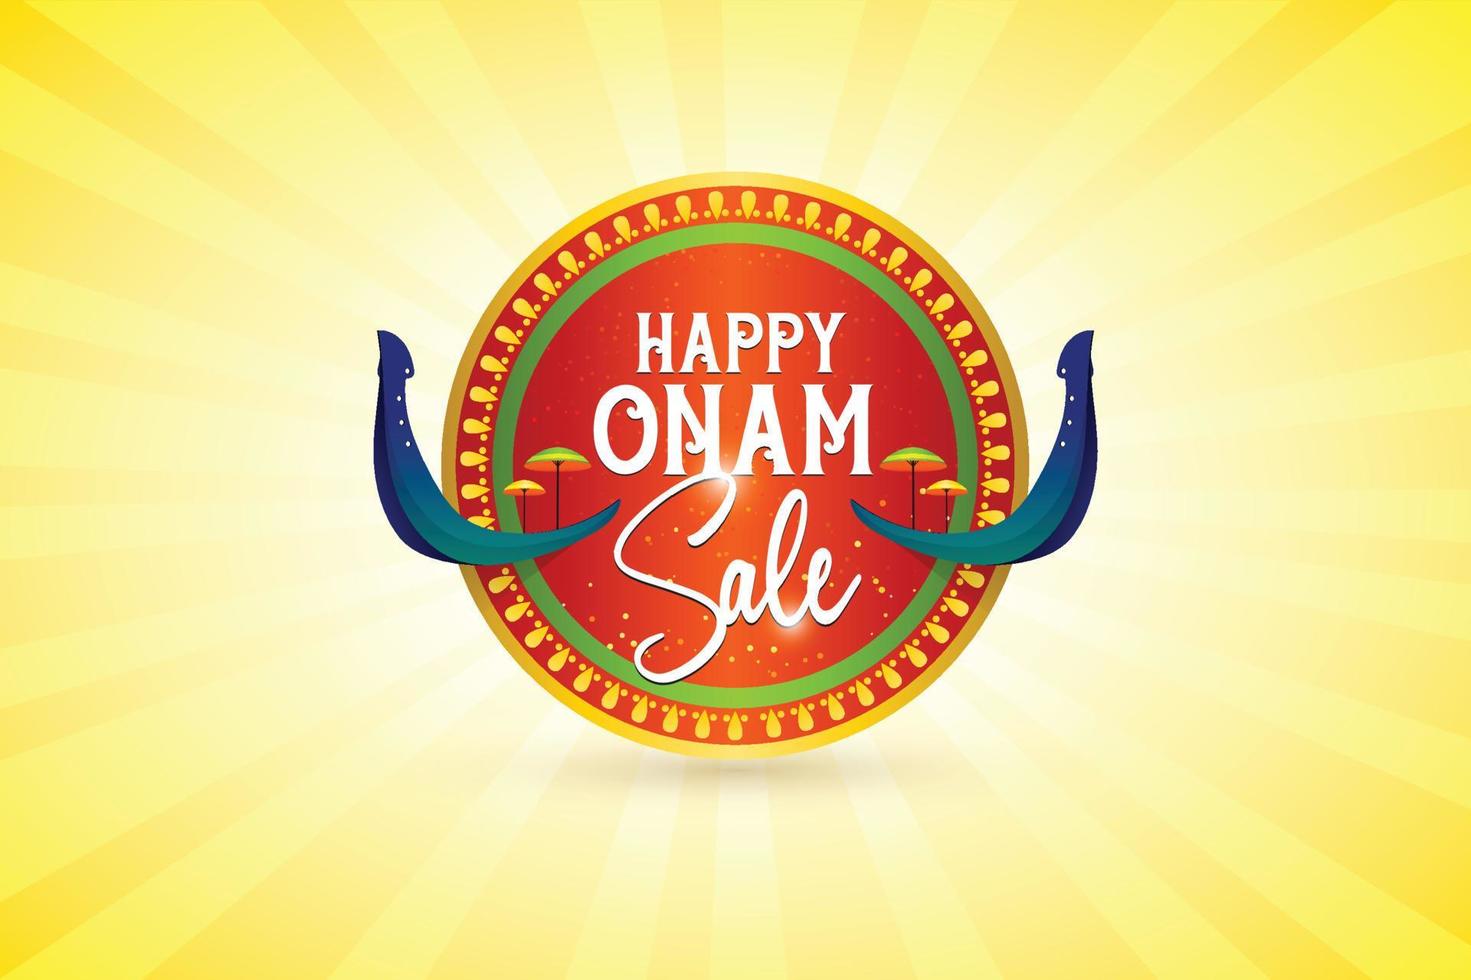 Happy Onam Sale bietet Premium-Logo, Symbol, Schild, Banner, Poster, Tag, Aufkleberdesign. vektor